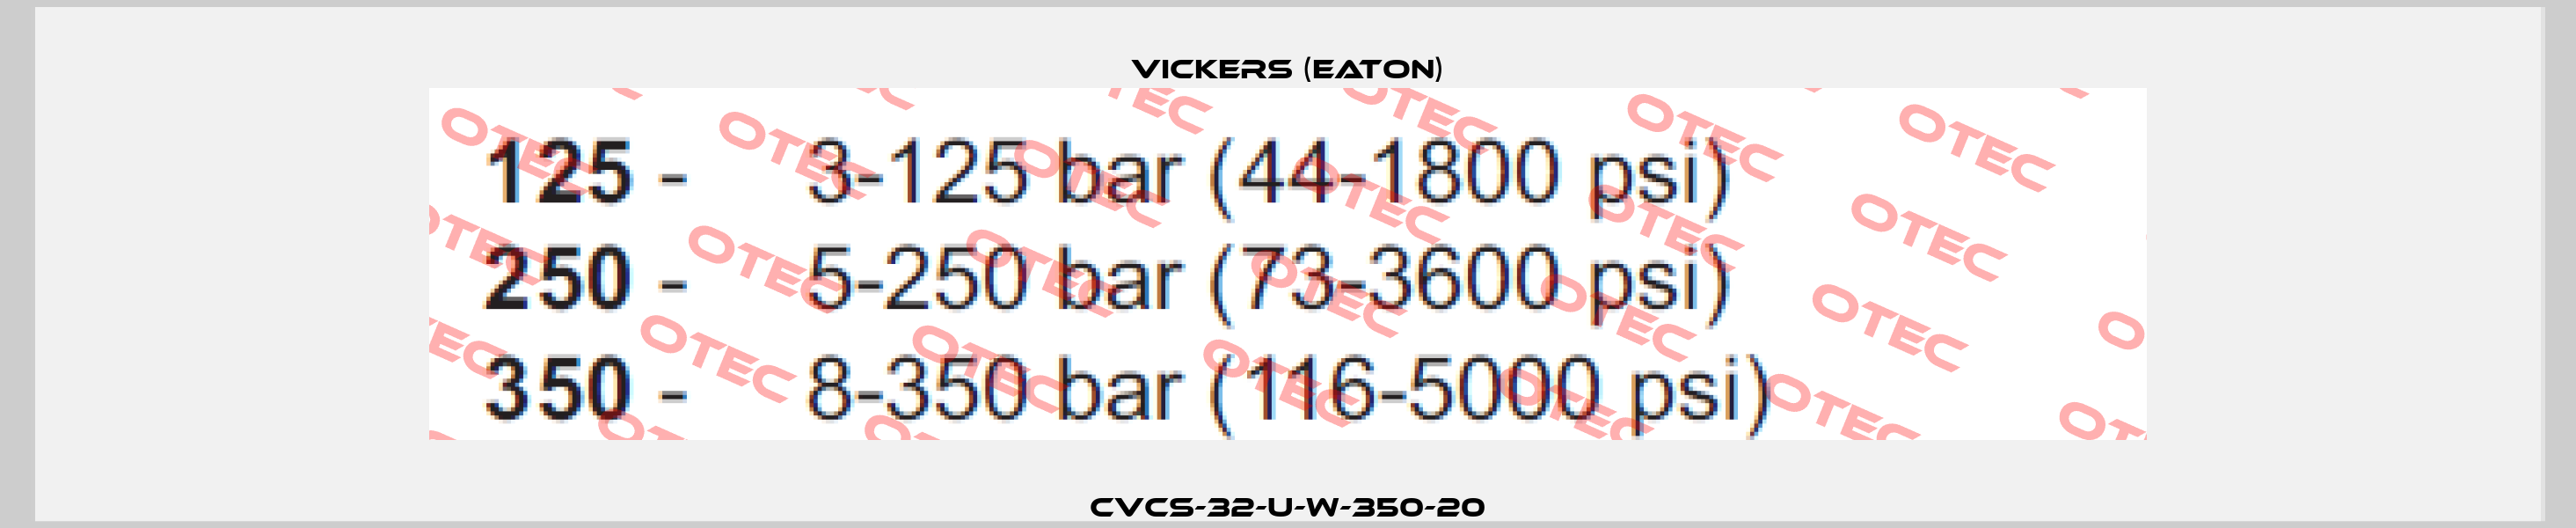 CVCS-32-U-W-350-20 Vickers (Eaton)